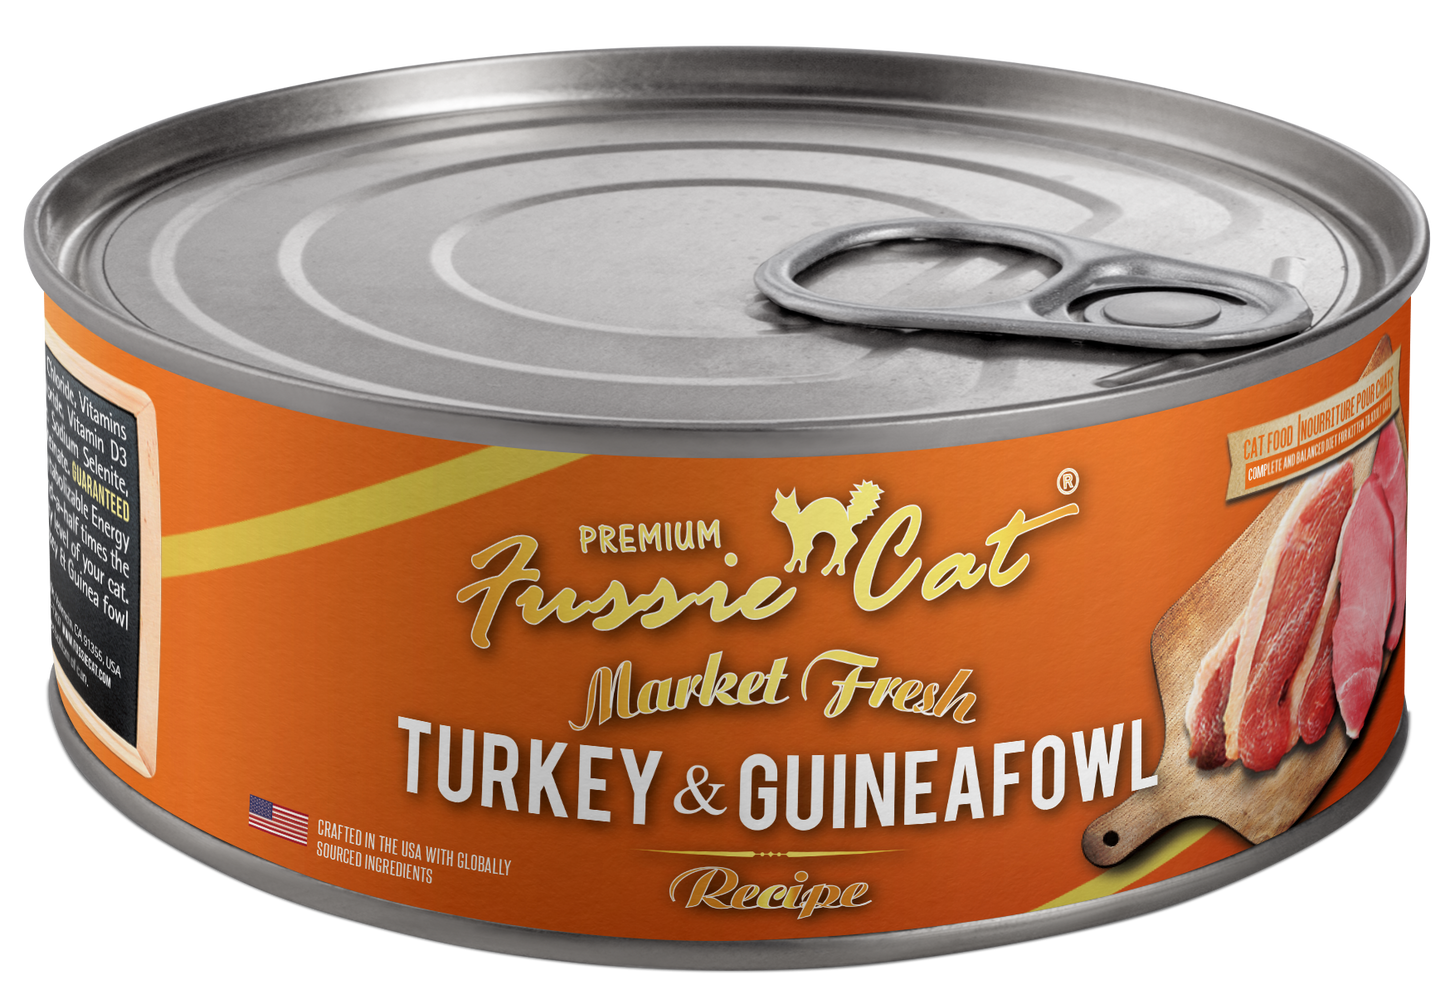 Fussie Cat Market Fresh Turkey & Guineafowl Canned Cat Food